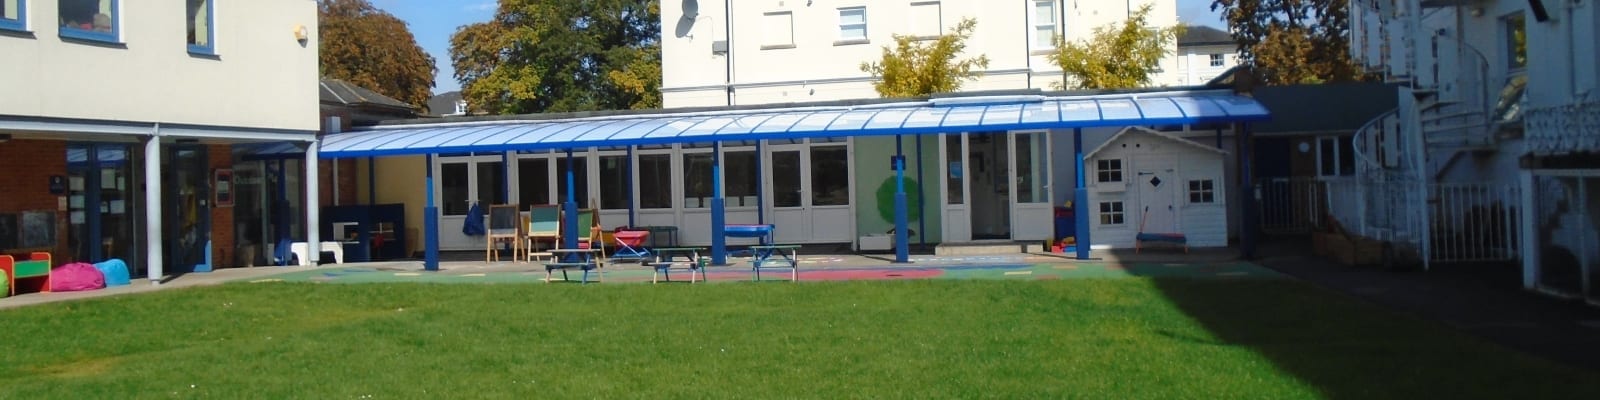 Berkhampstead School Blue Canopy